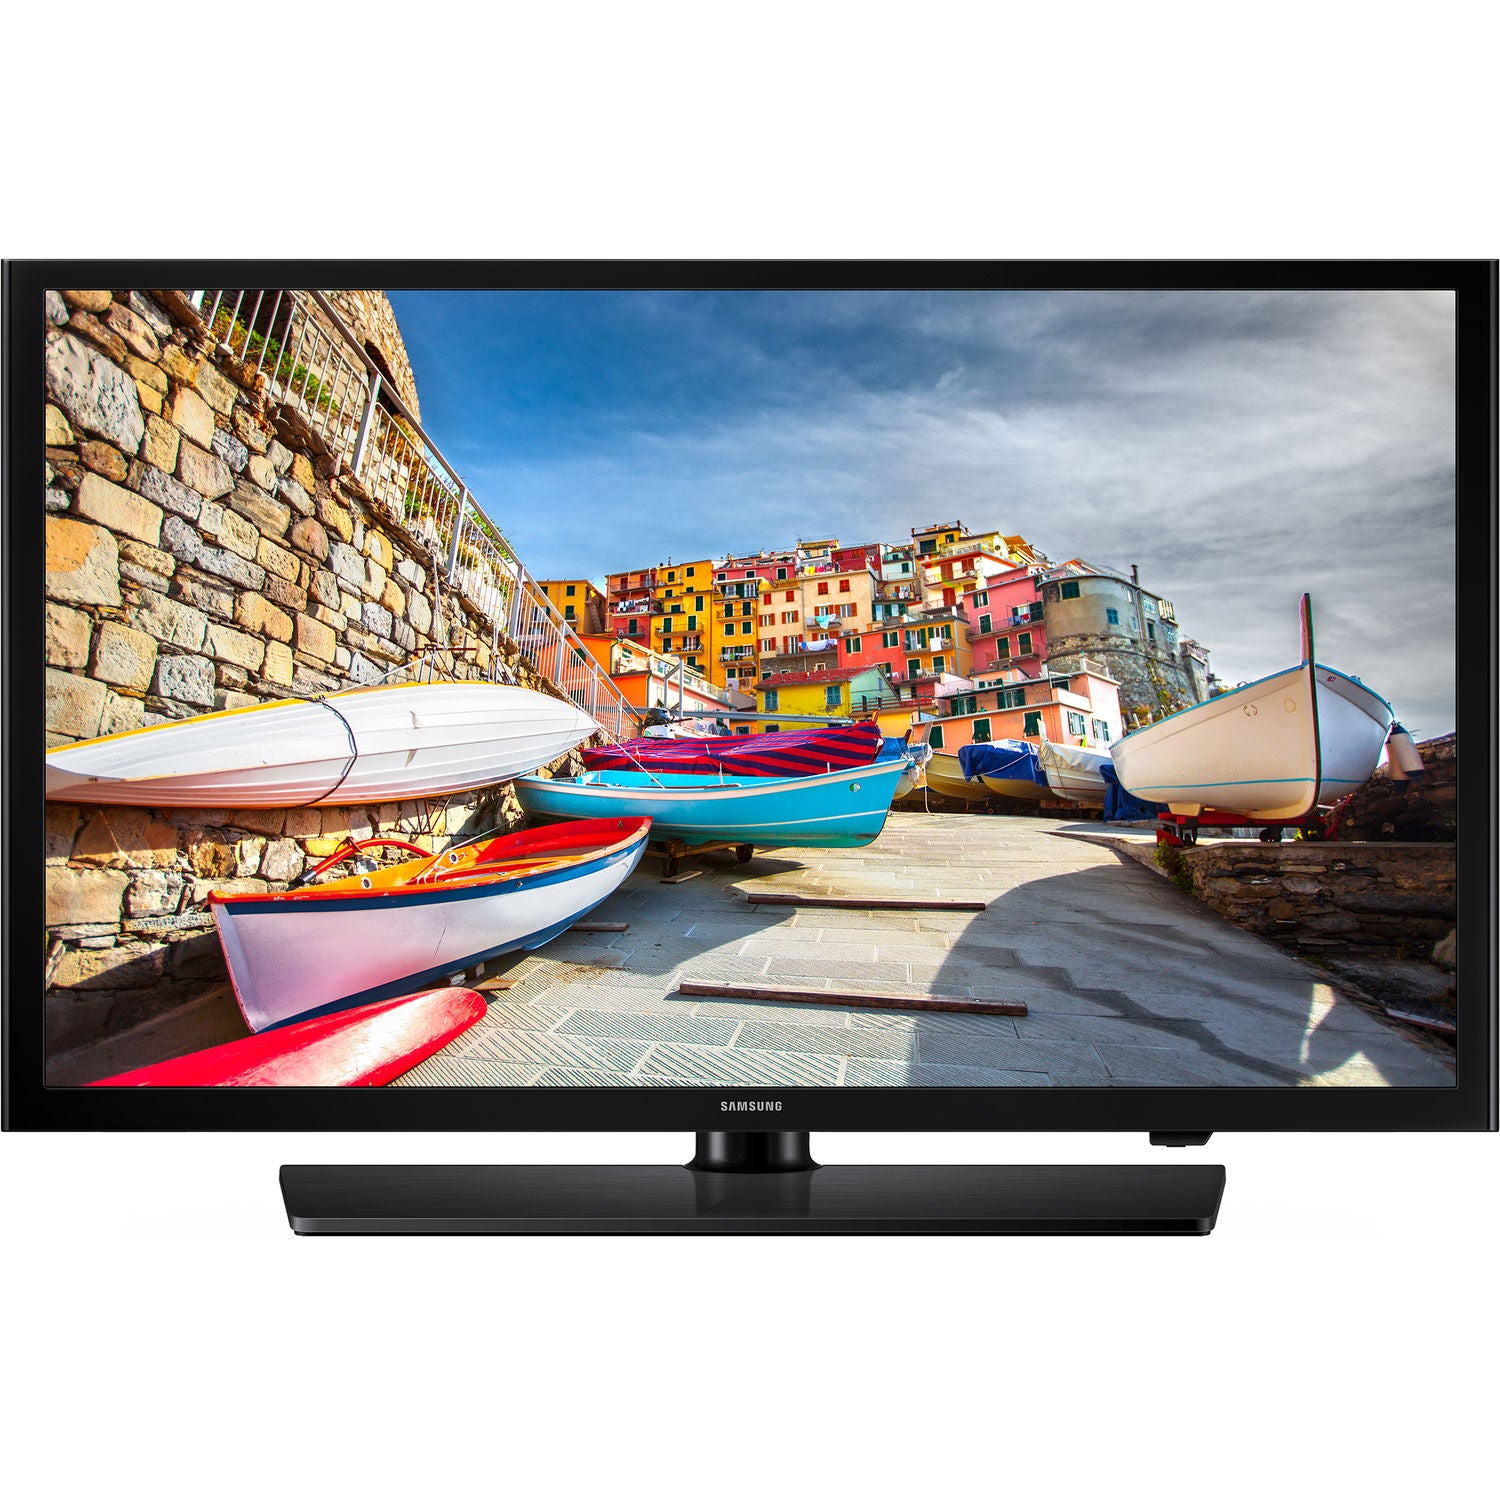 Samsung HG43NE470SFXZA 470 Series 43" Full HD Hospitality TV (Black) - Samsung Parts USA